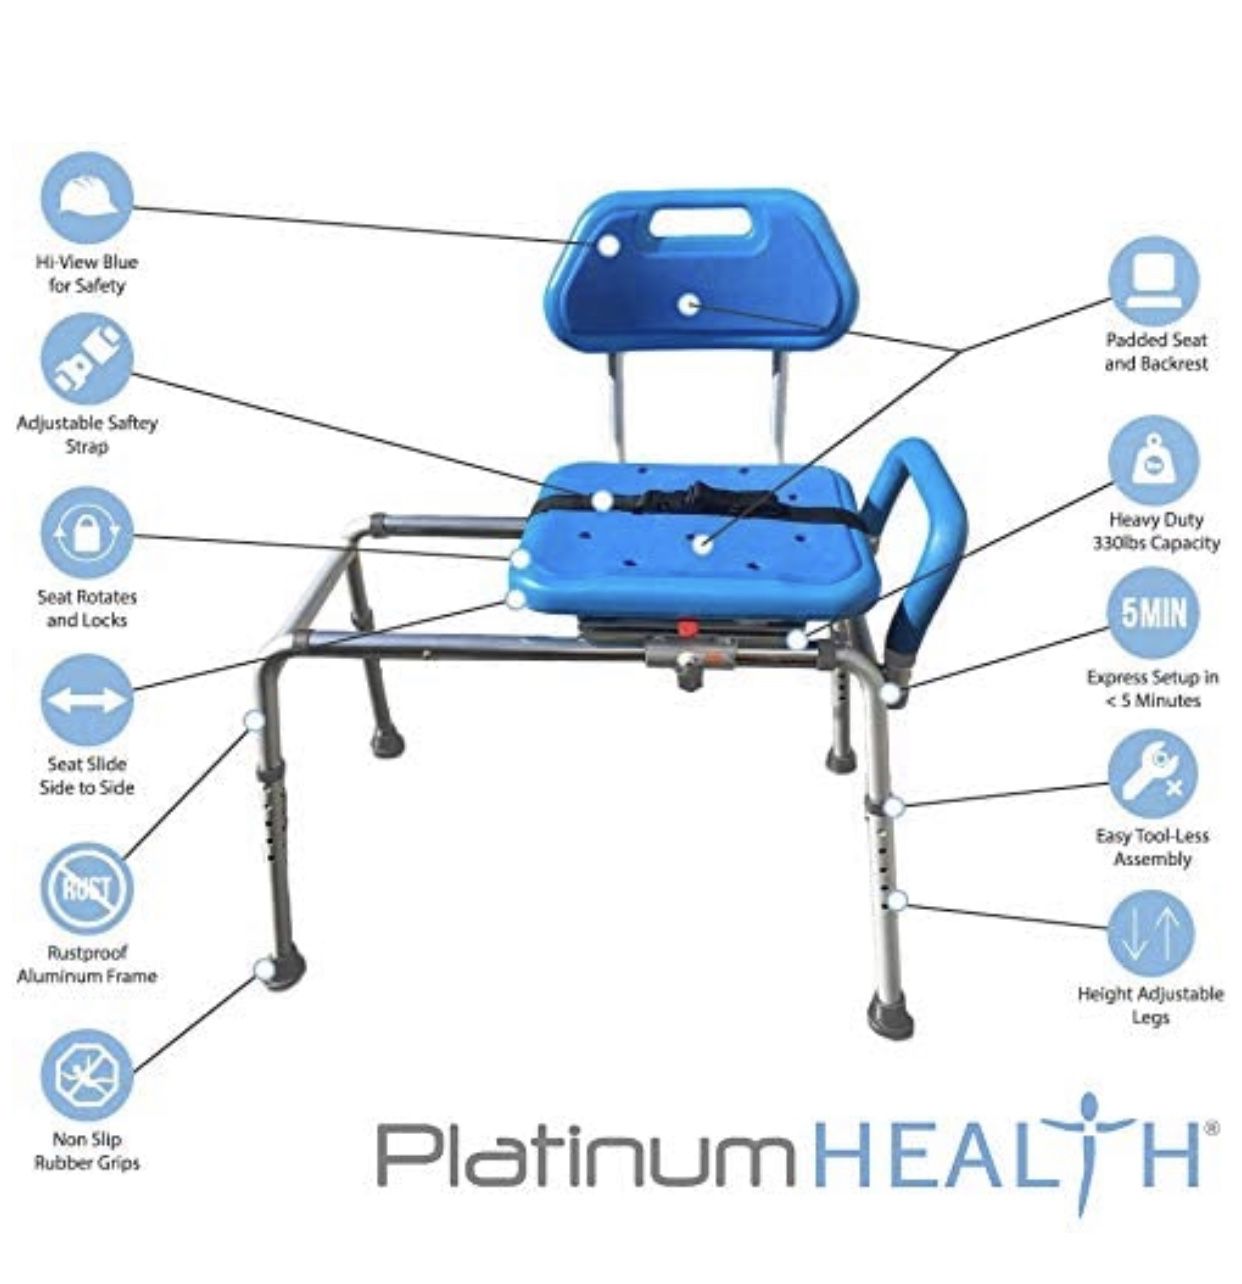 Gateway Premium Sliding Bath Transfer Bench with Swivel Seat-Padded (Blue)